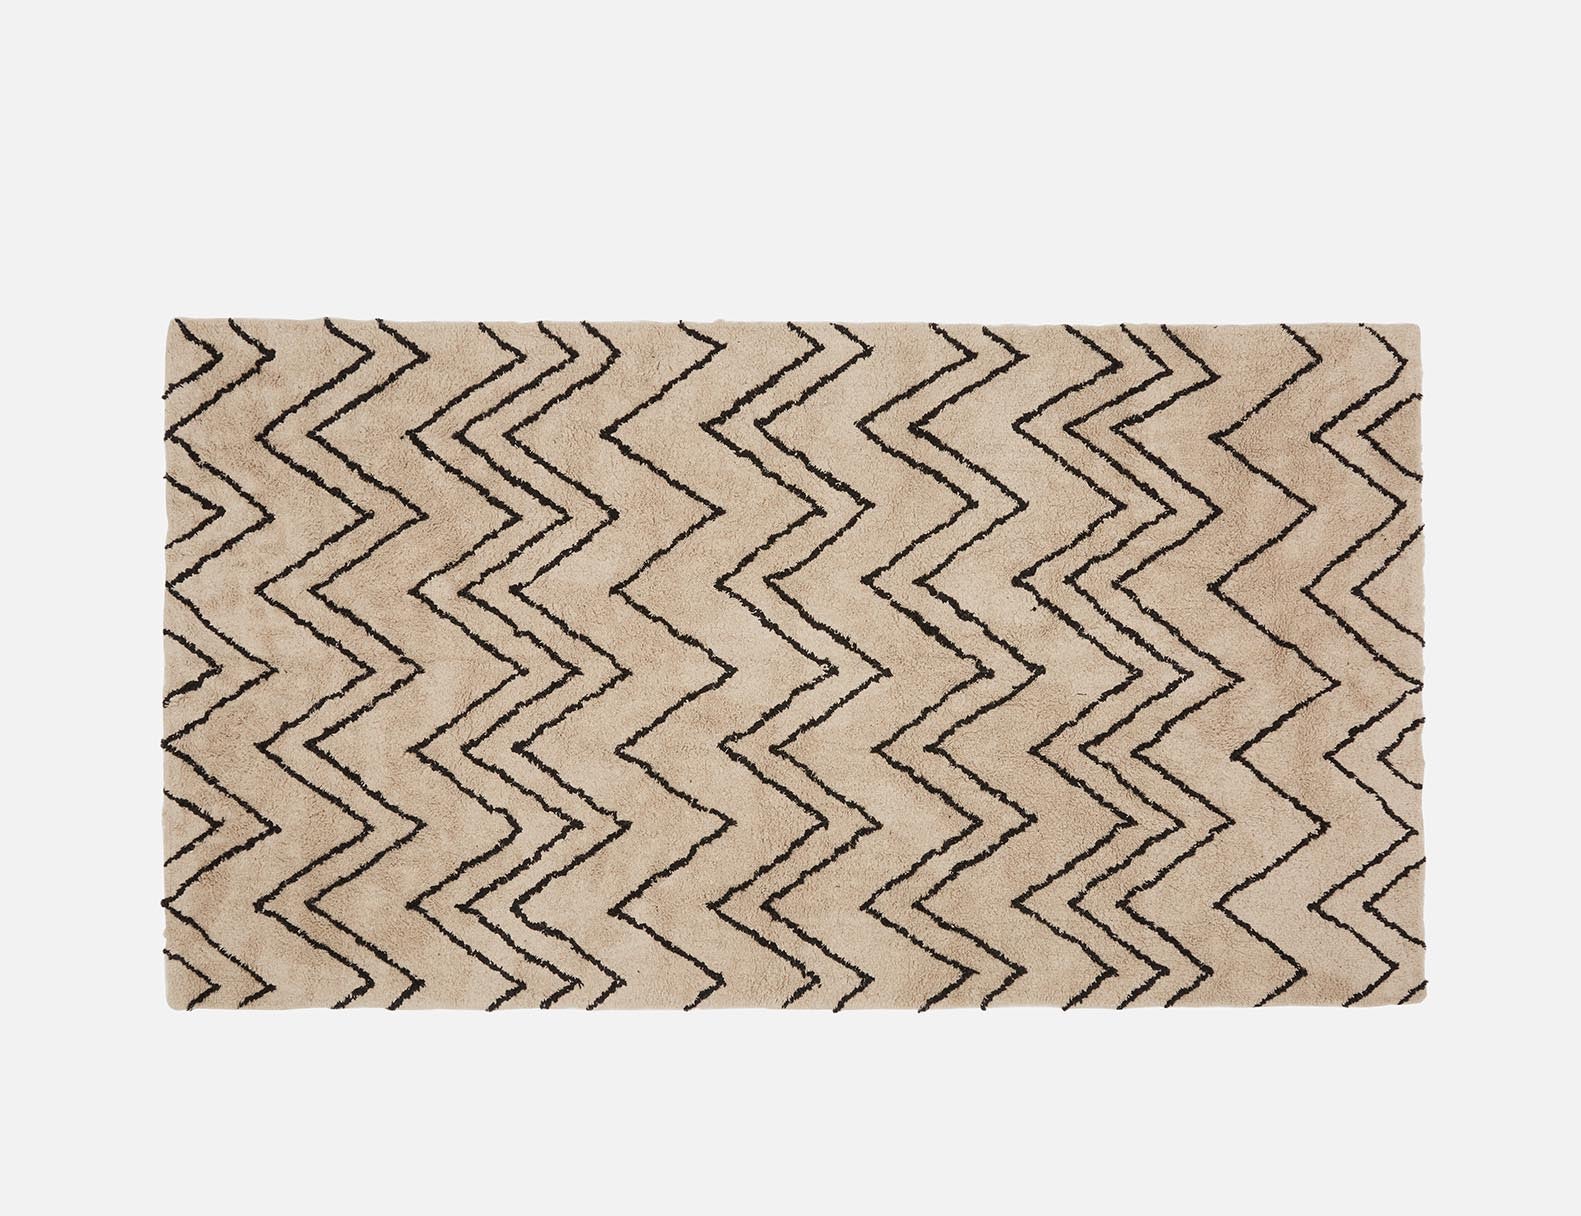 ARMANN tufted cotton rug 152 cm x 274 cm